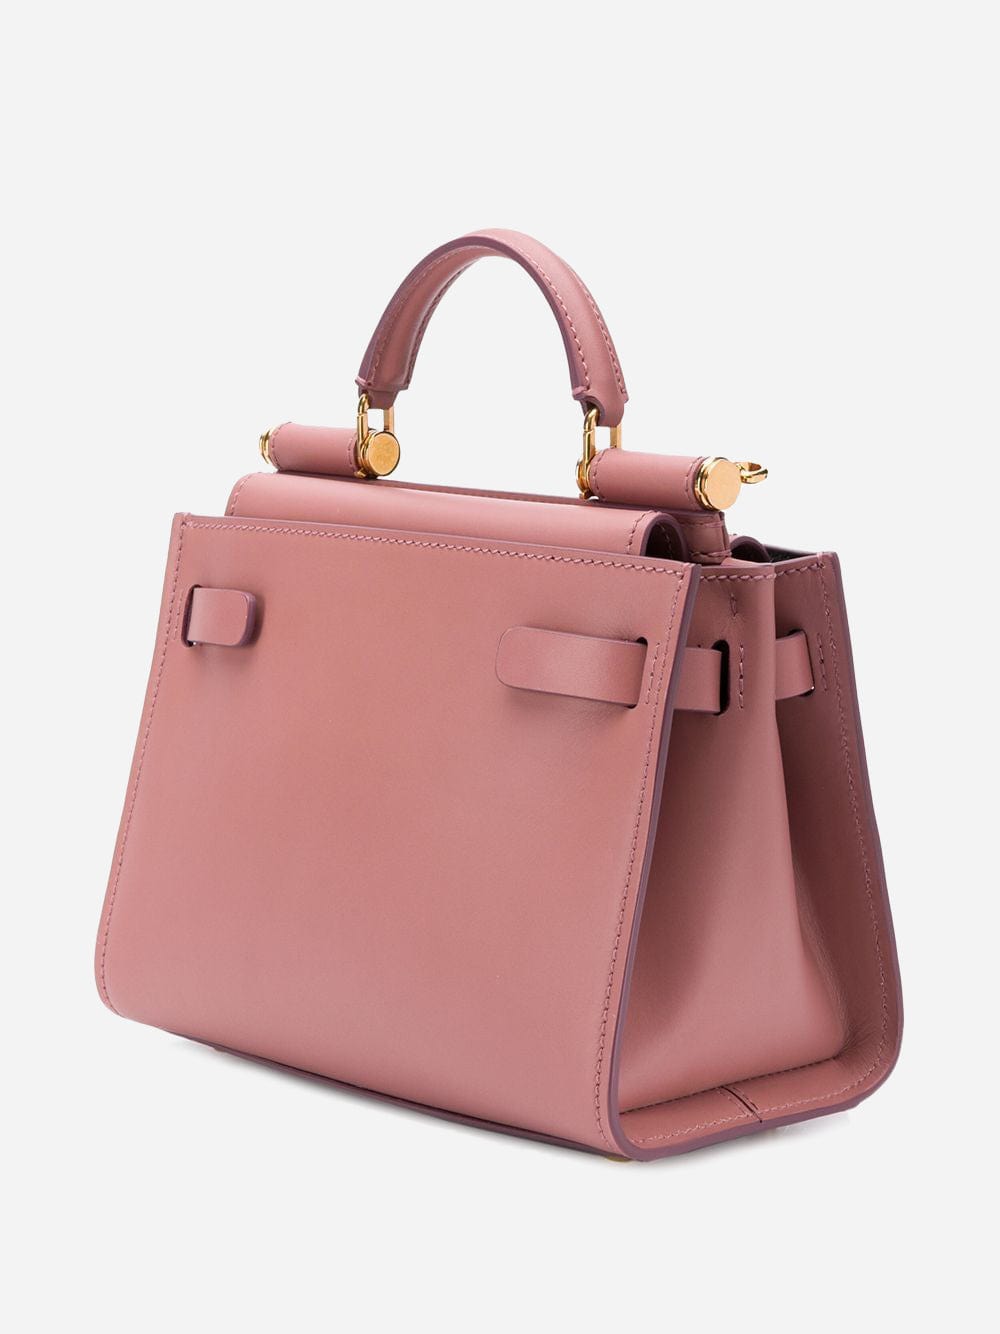 Dolce & Gabbana Small New Sicily Shoulder Bag